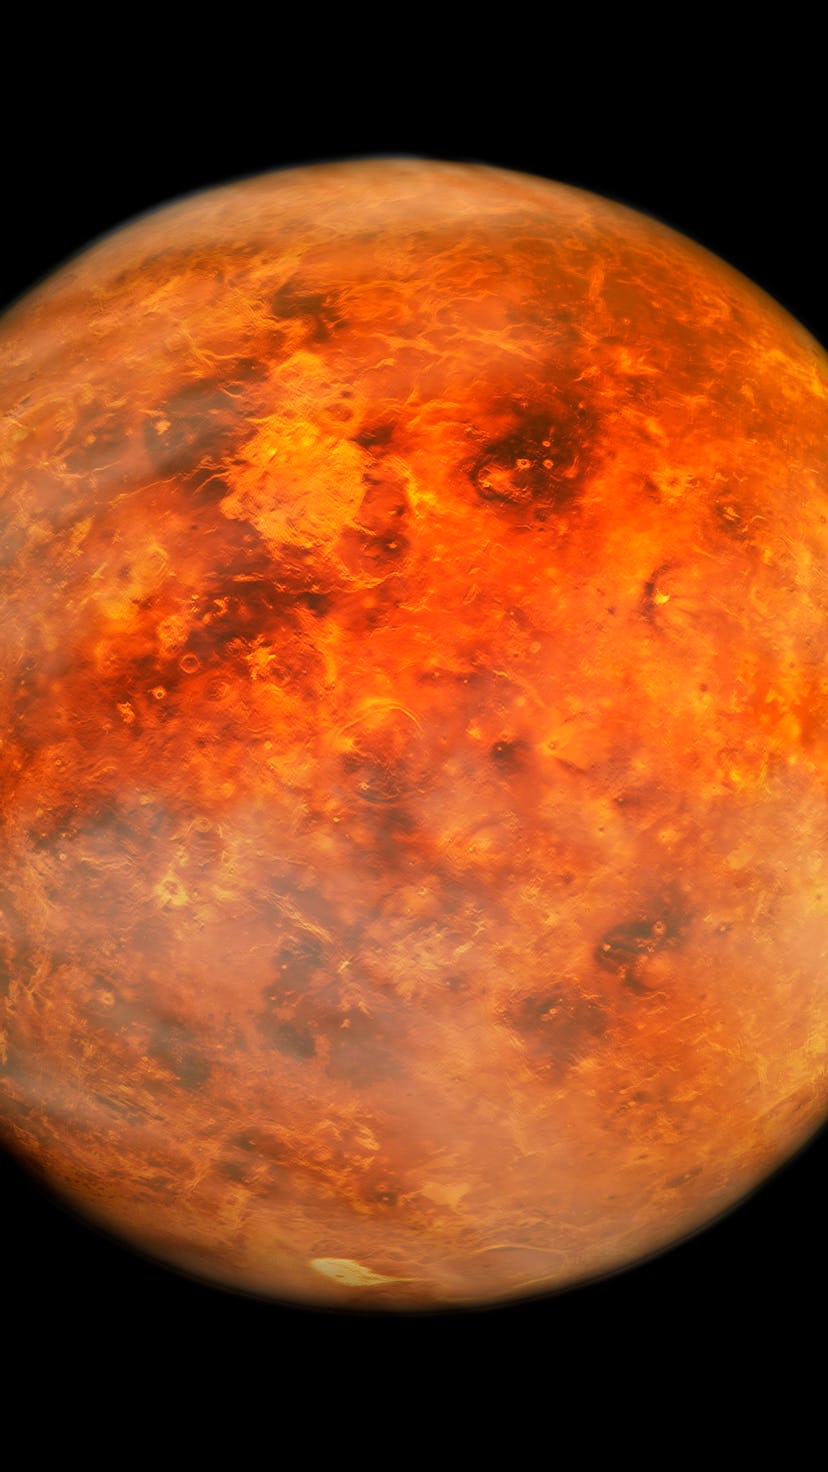 Venus enters its retrograde period on Dec. 19 and lasts until Jan 29, 2022.